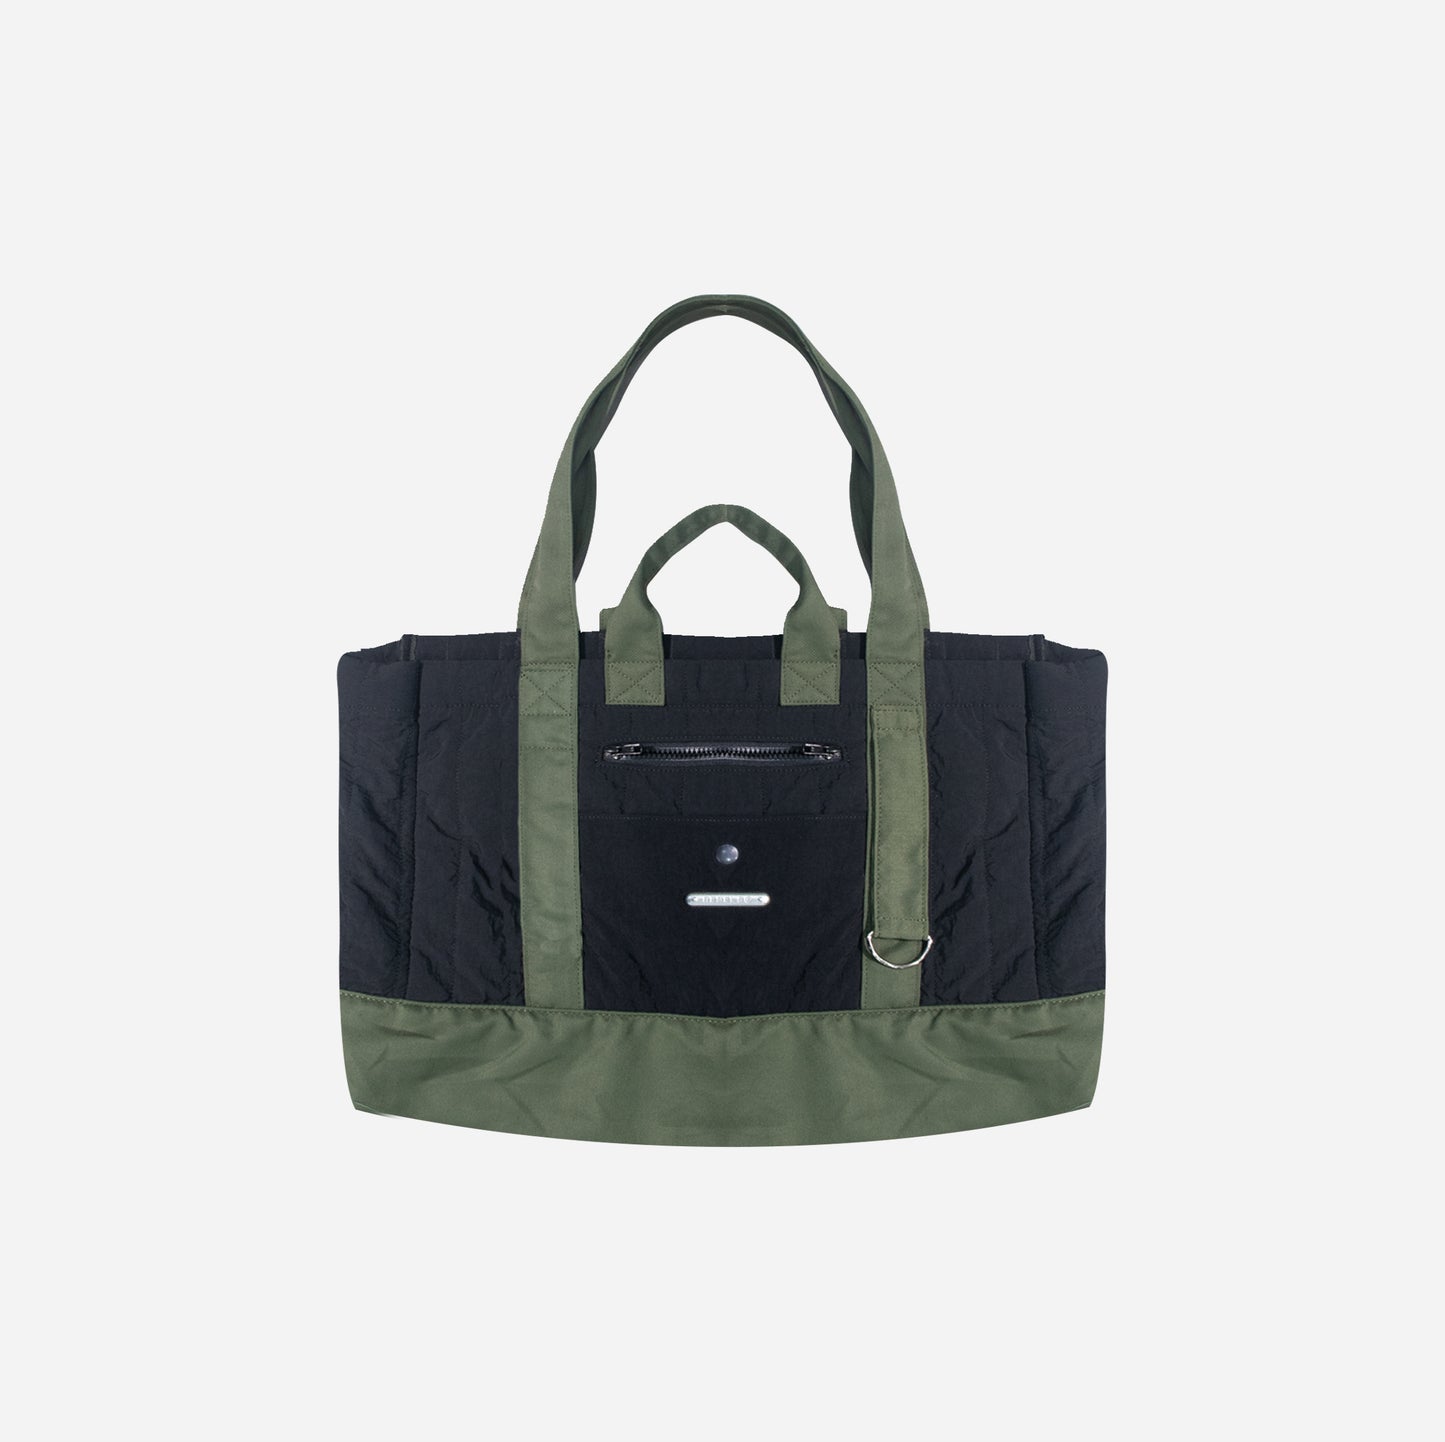 XL tote bag - black + green